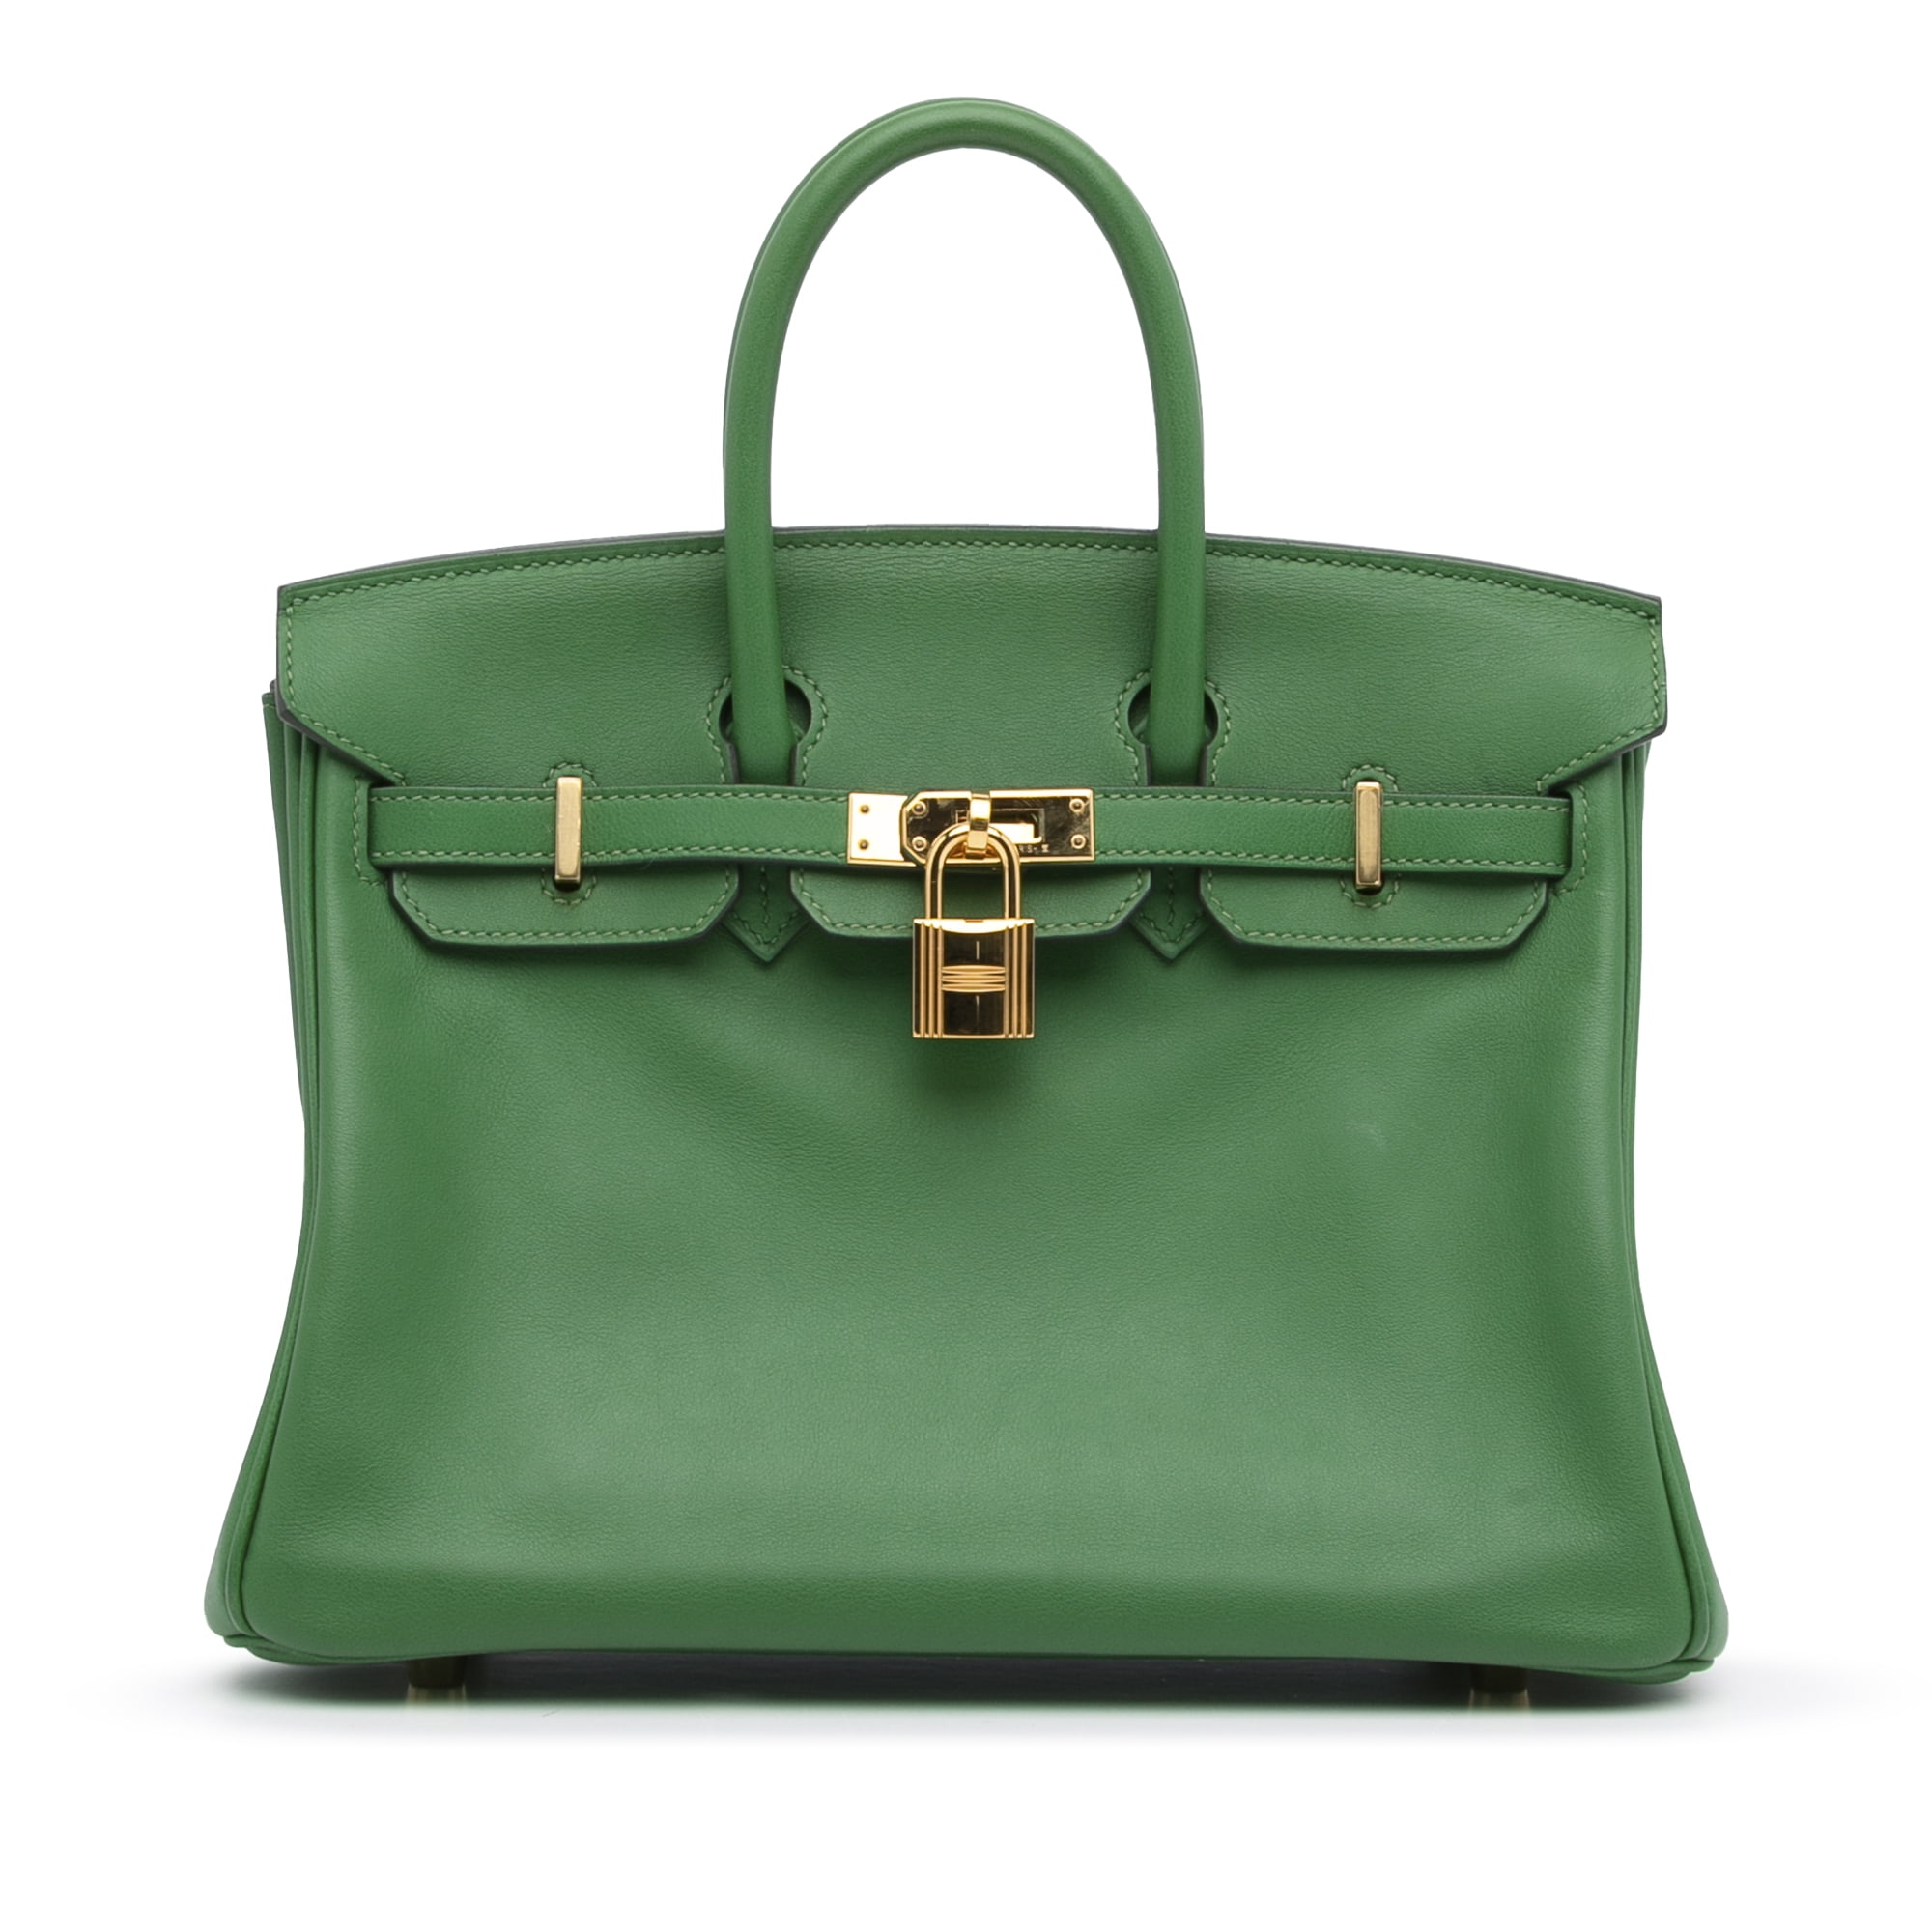 Unisex Pre-Owned Authenticated Hermes Swift Birkin 25 Calf Leather Green  Handbag Top HandleBag 